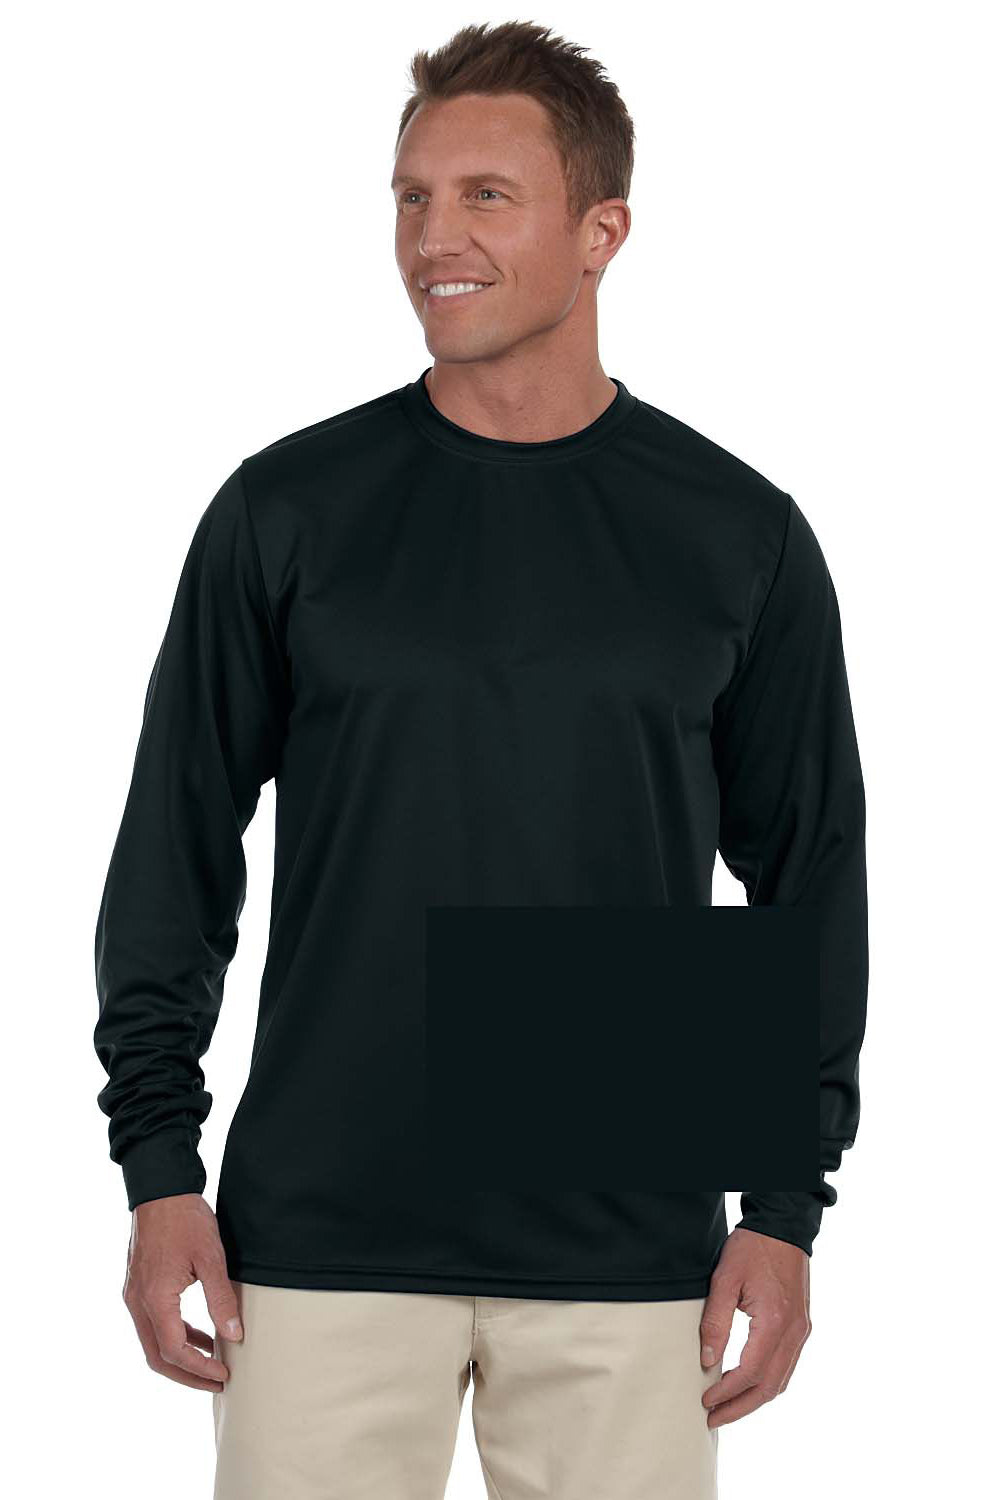 Augusta Sportswear 788 Mens Moisture Wicking Long Sleeve Crewneck T-Shirt Black Model Front